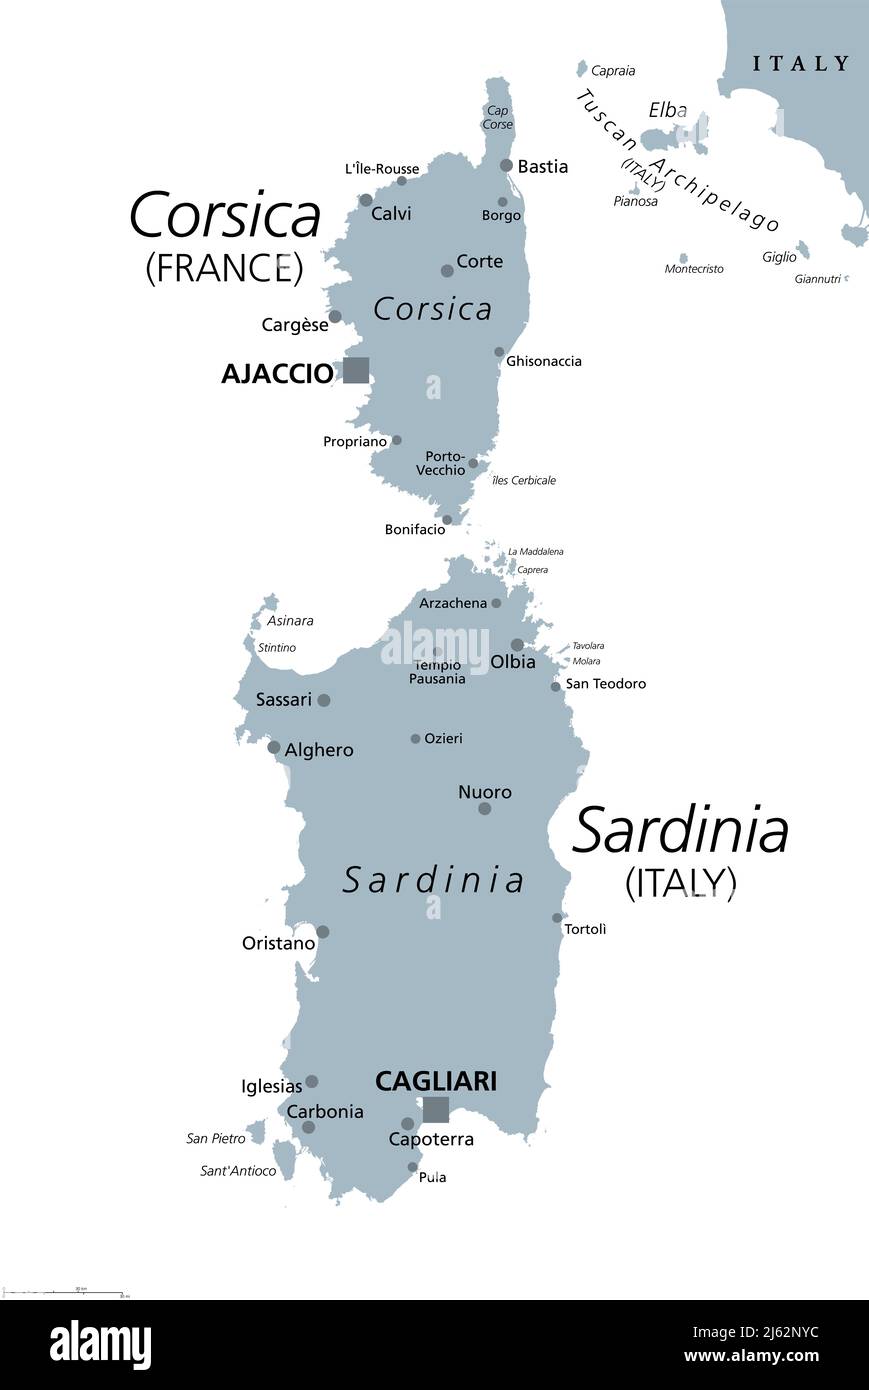 Corsica and Sardinia, gray political map. French and Italian islands, with capitals Ajaccio and Cagliari, in the Mediterranean Sea. Stock Photo